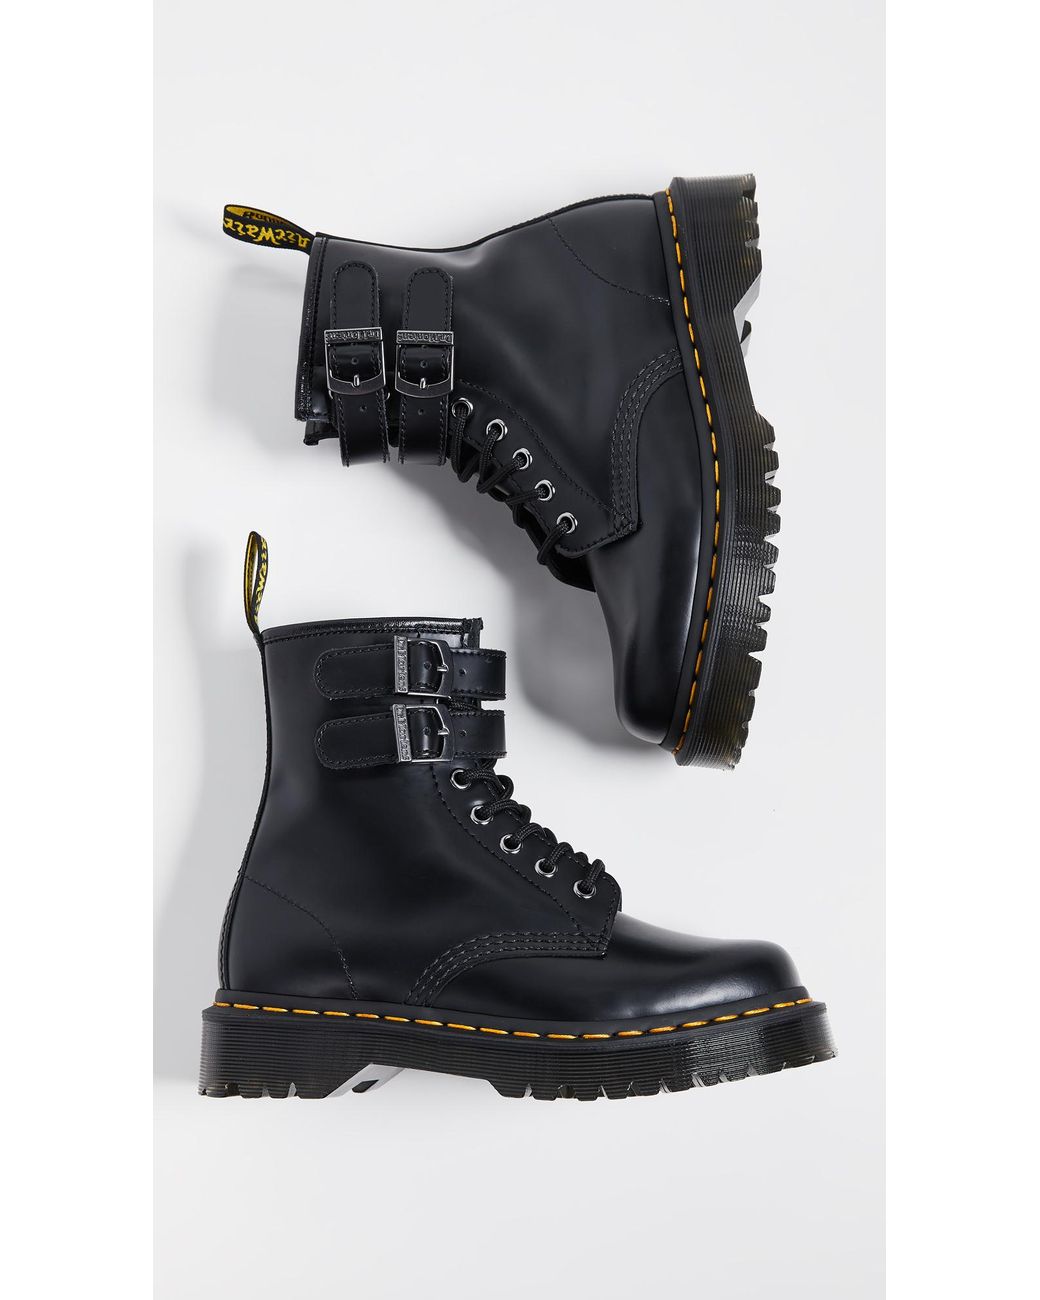 Dr. Martens Leather 1460 Alt 8 Eye Boots in Black | Lyst